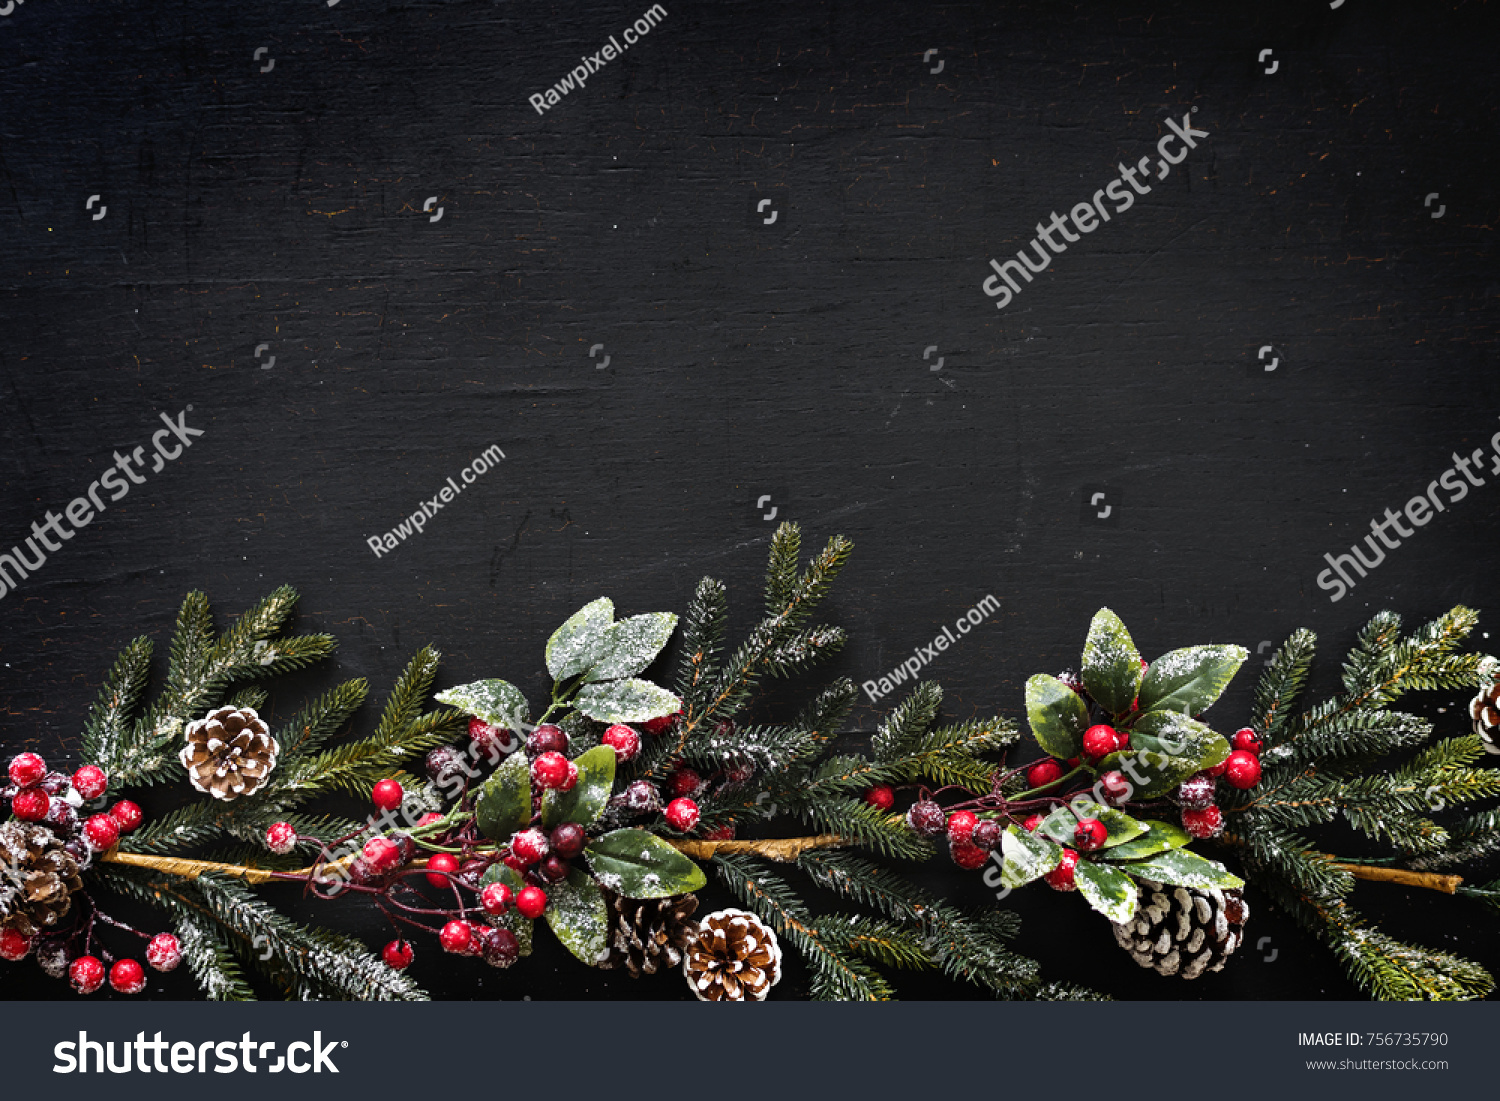 Christmas design space wallpaper #756735790